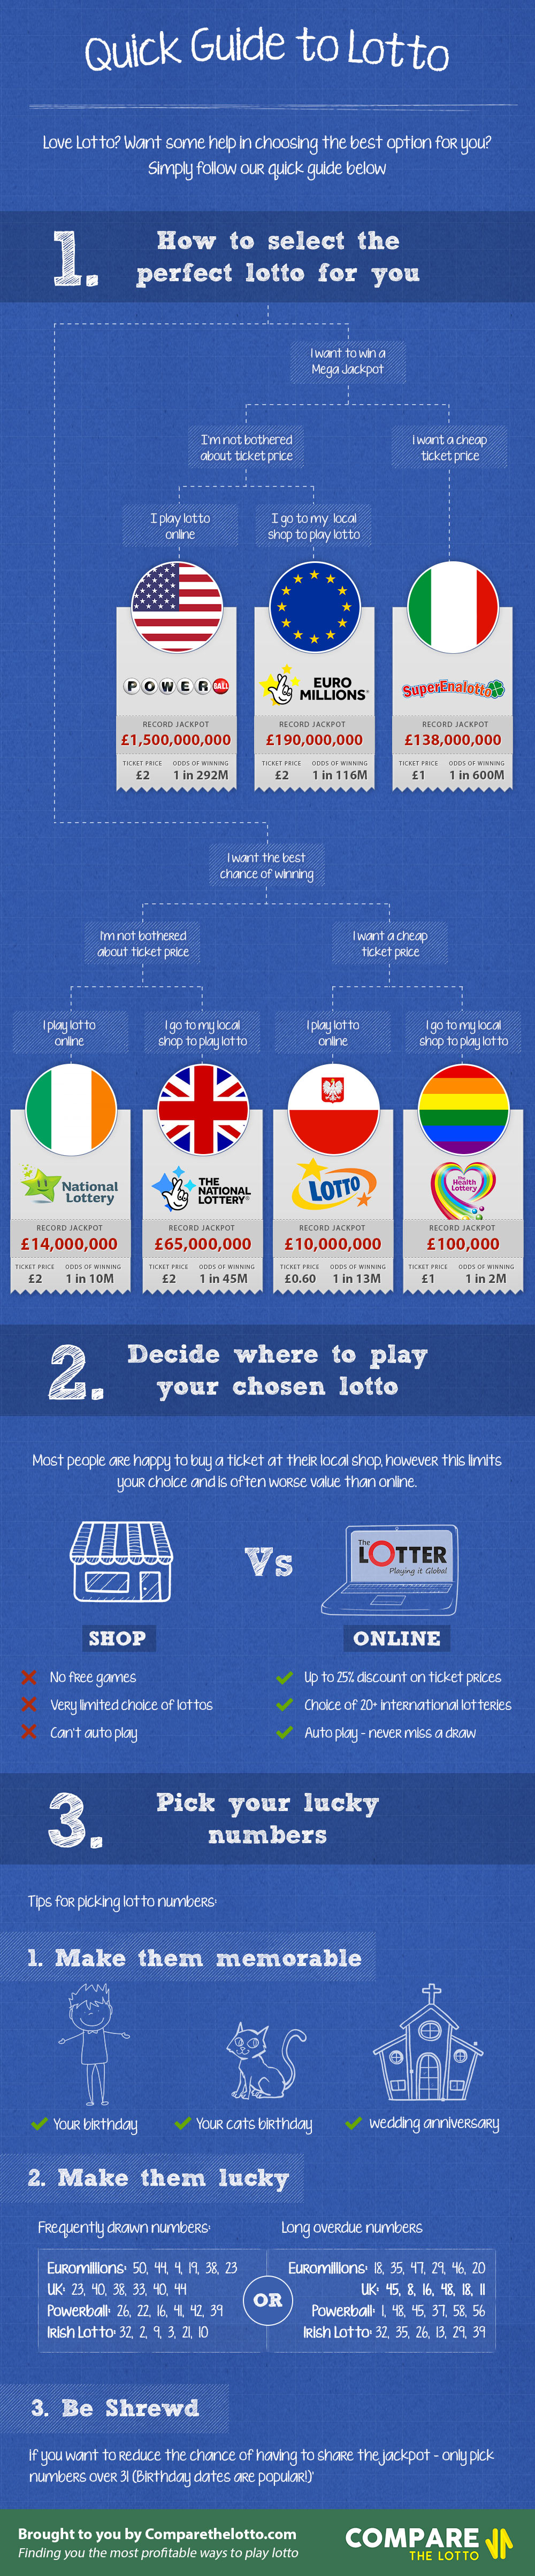 lotto infographic